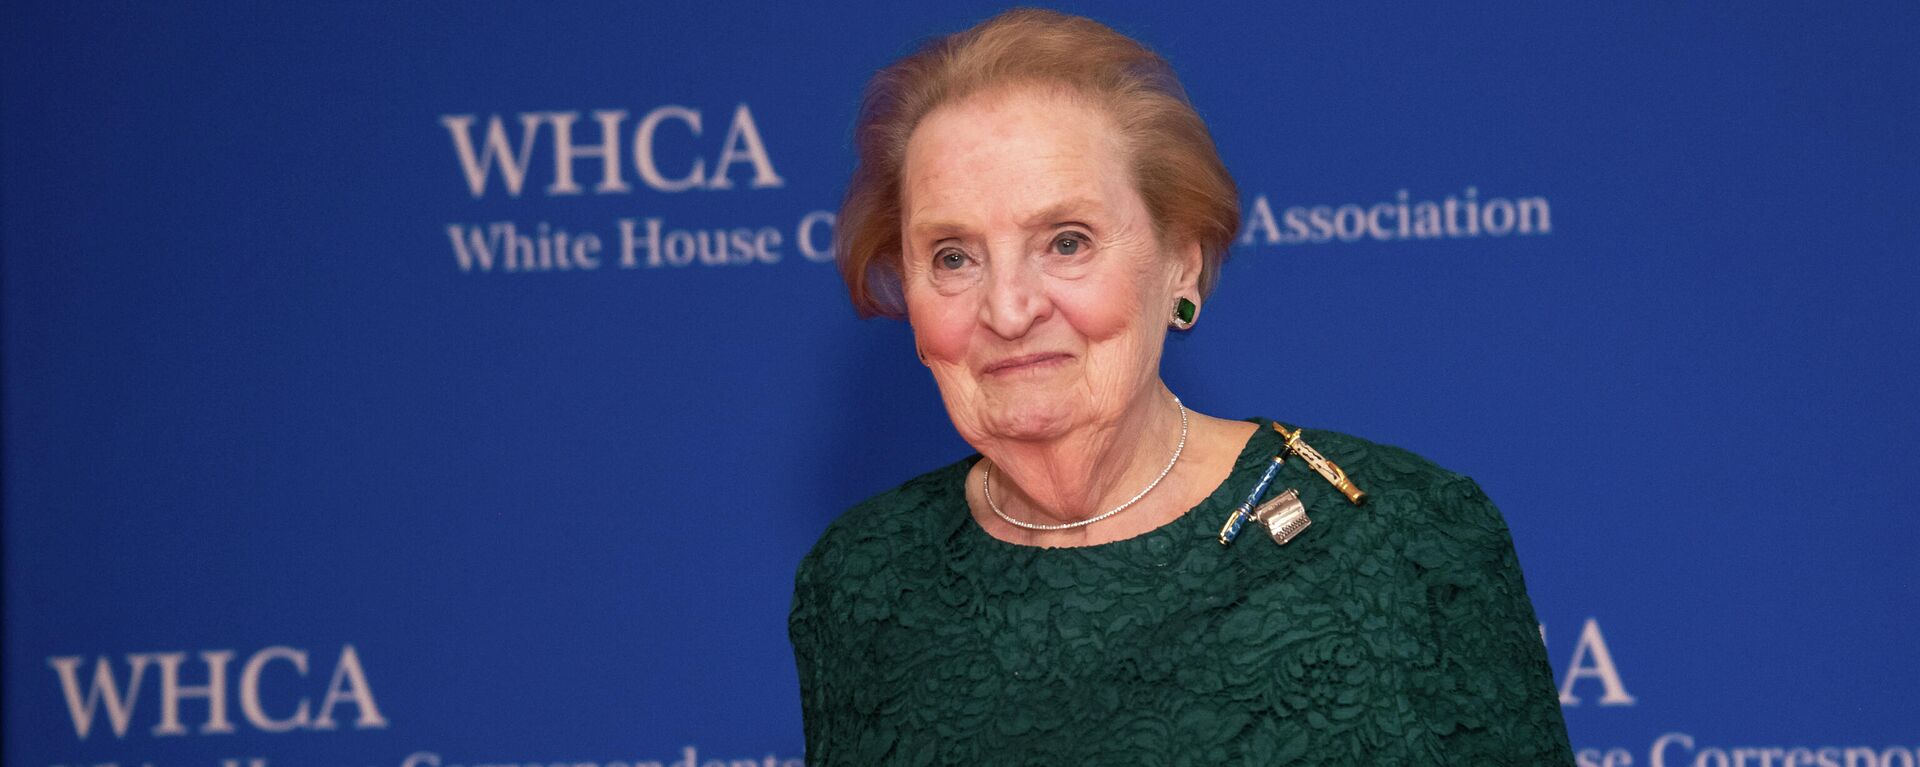 Madeleine Albright attends the 2019 White House Correspondents' Association dinner at the Washington Hilton on Saturday April 27, 2019, in Washington.  - Sputnik International, 1920, 24.03.2022